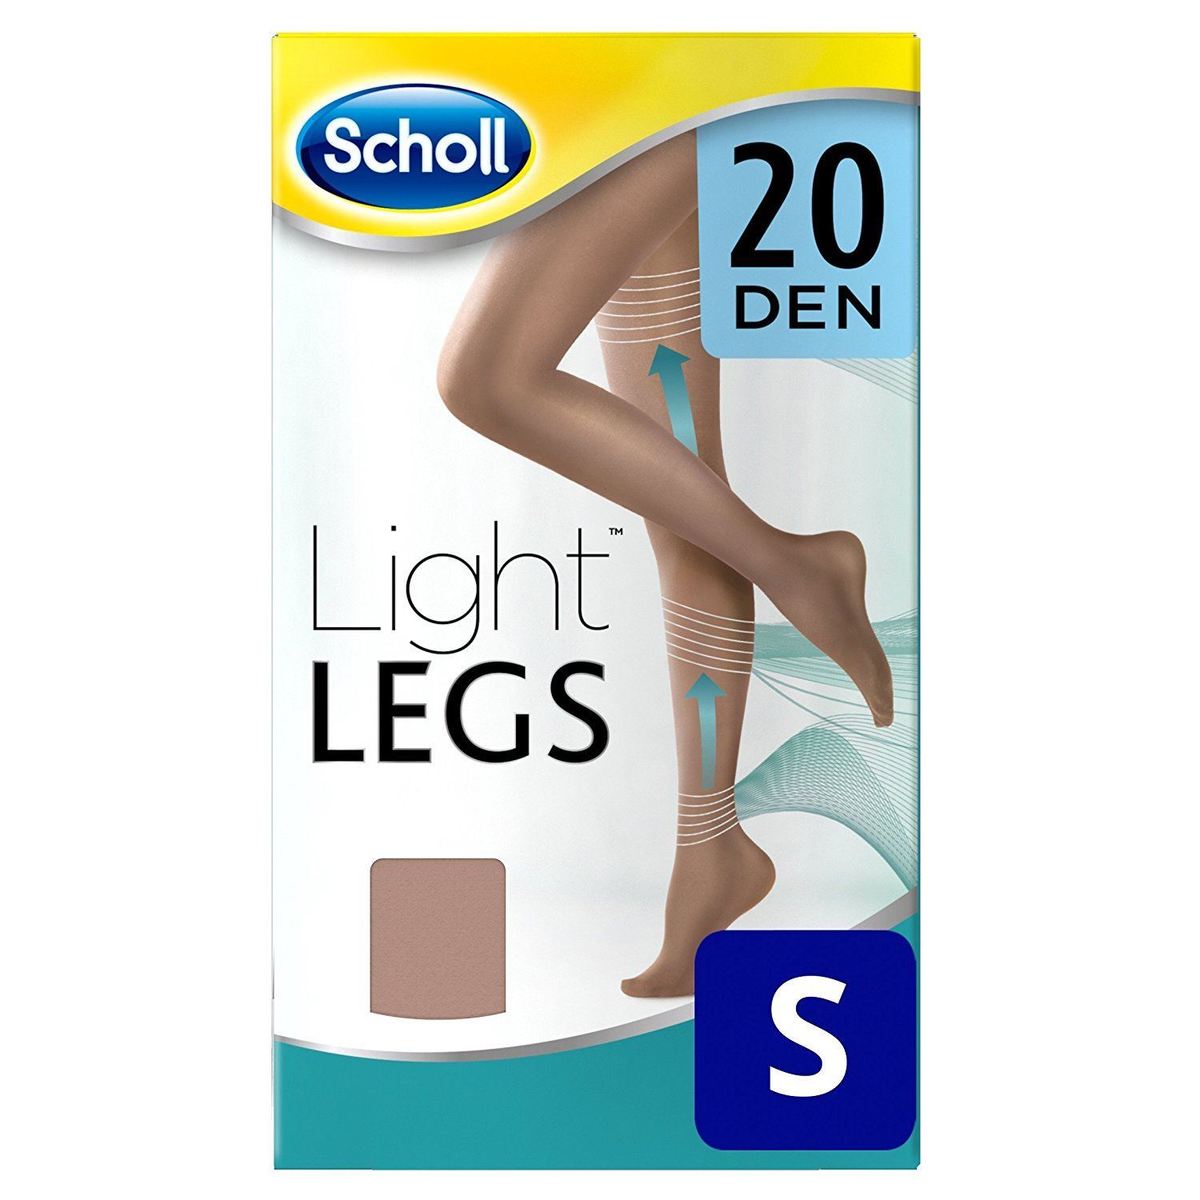 Scholl Collants Light Legs Fins Chair 20 Deniers Taille S